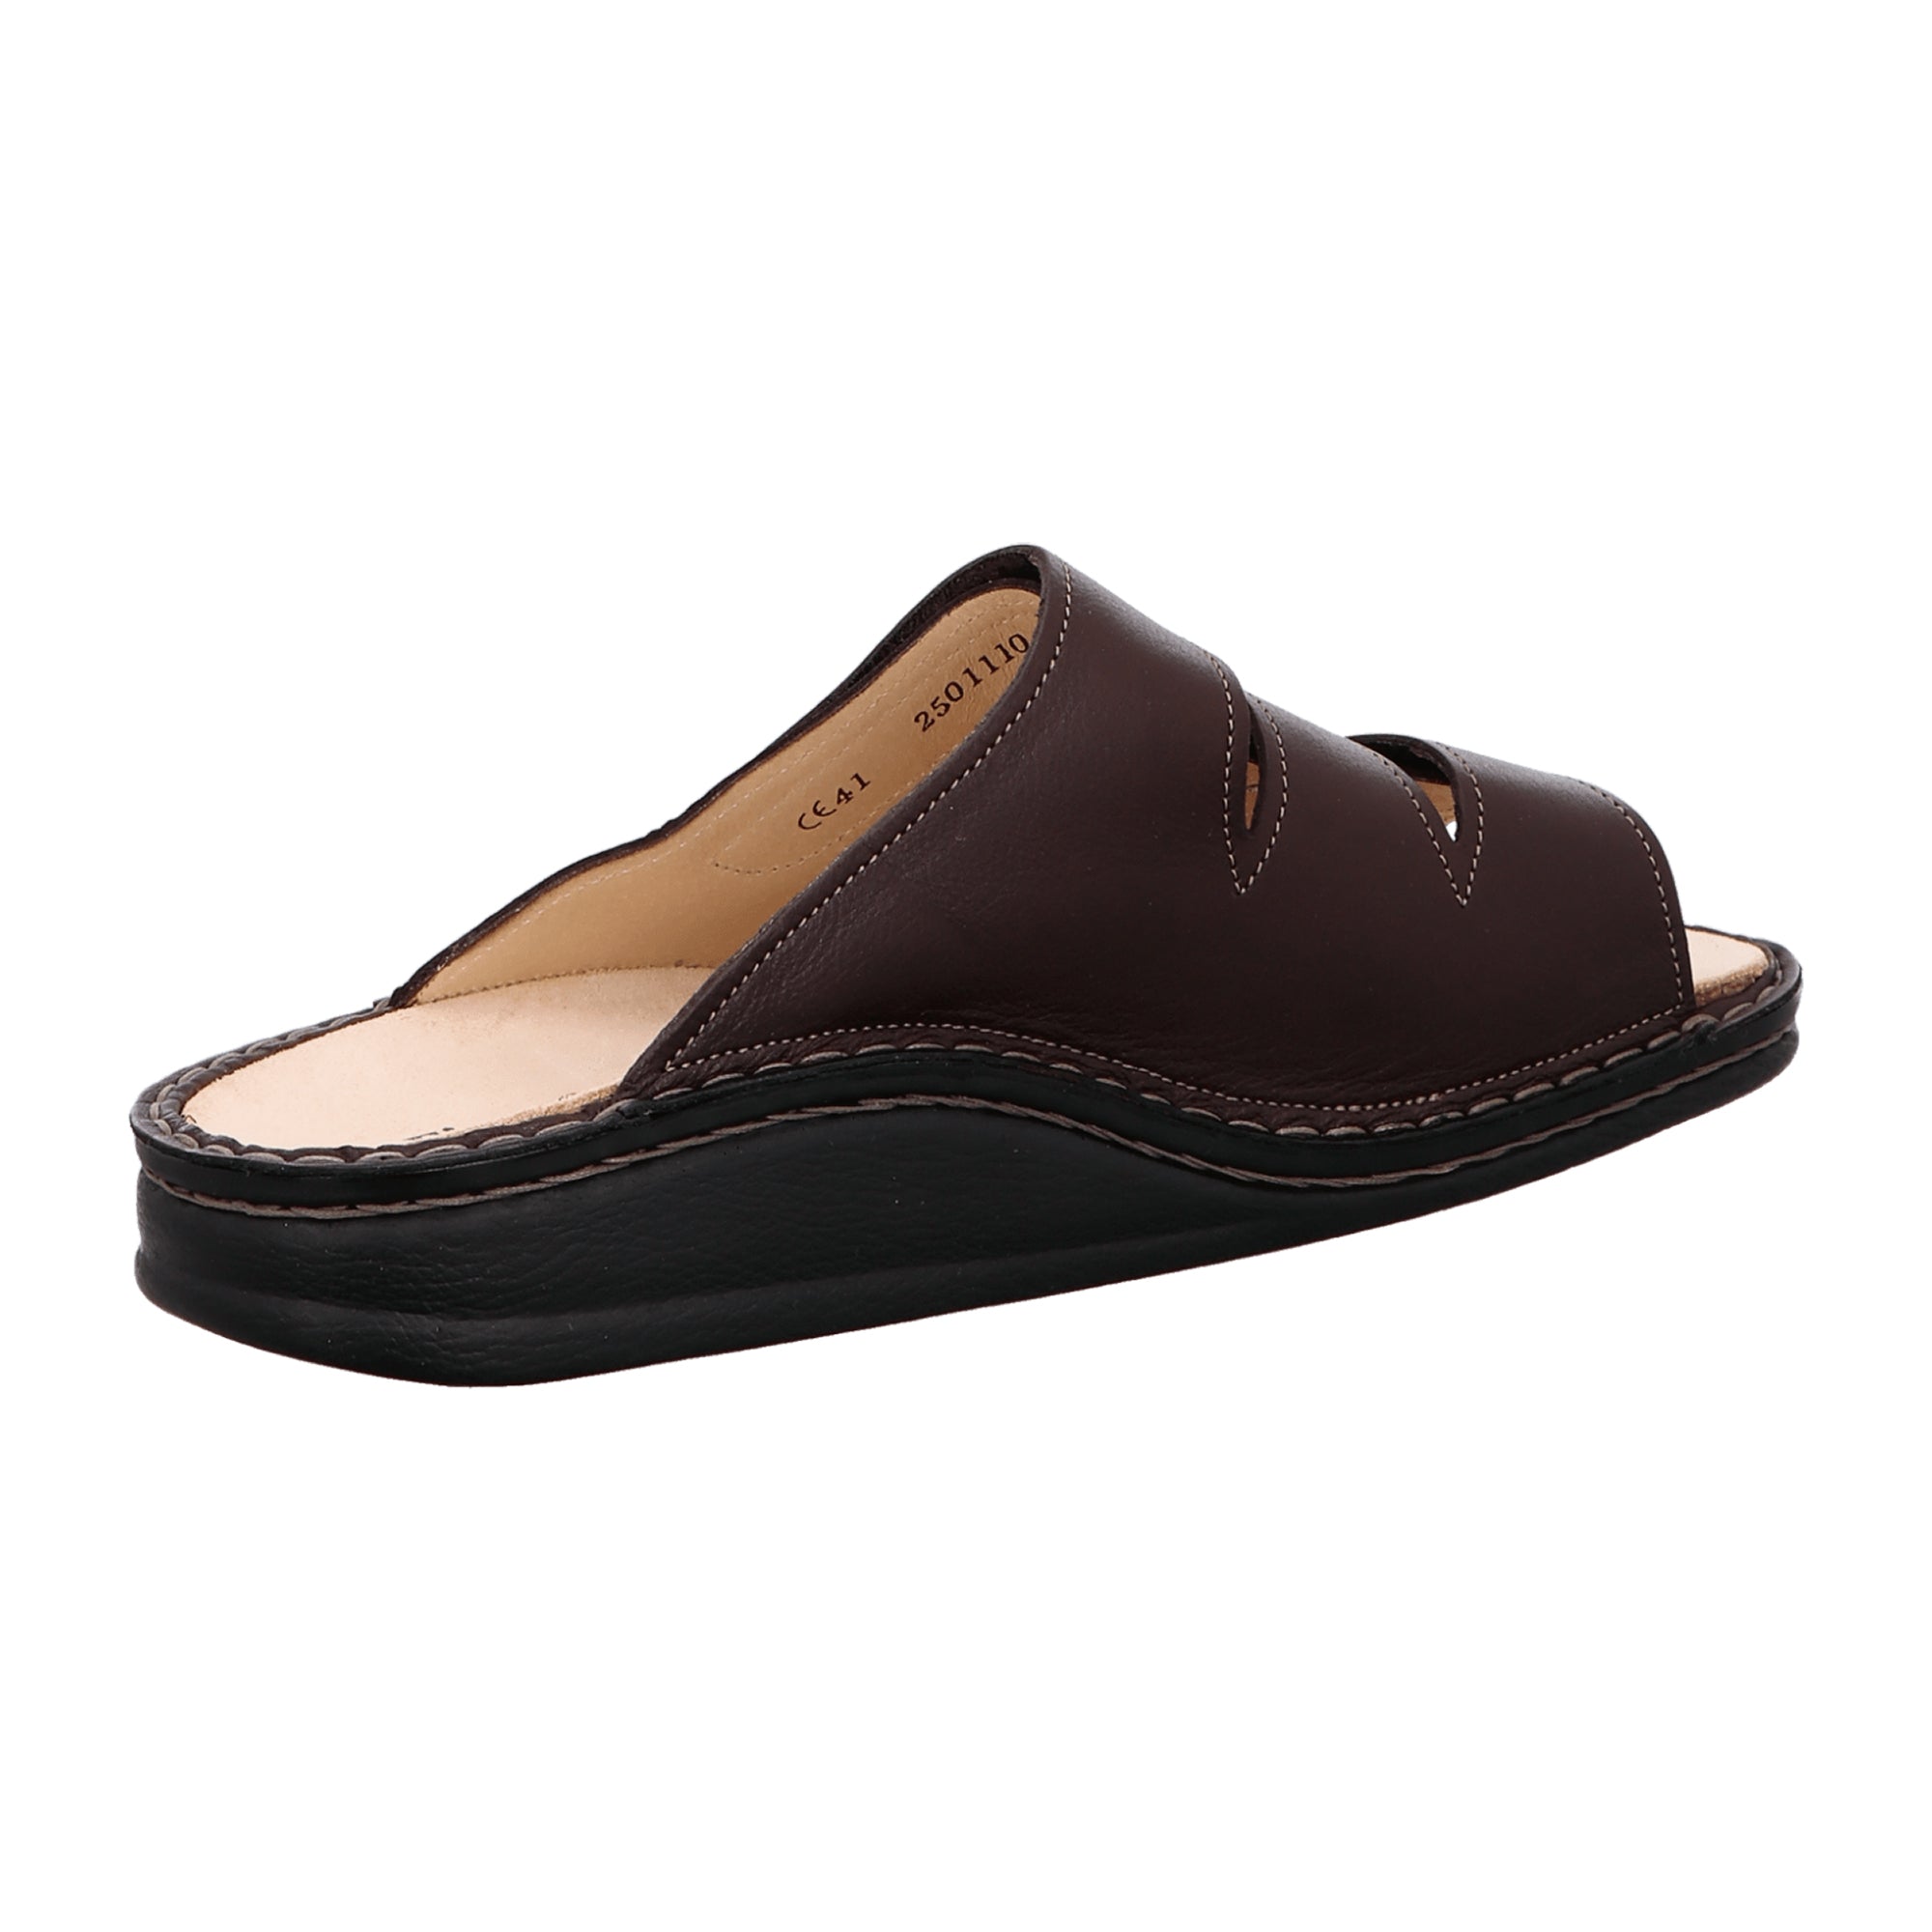 Finn Comfort Korfu Men's Brown Sandals - Durable & Stylish Comfort Footwear